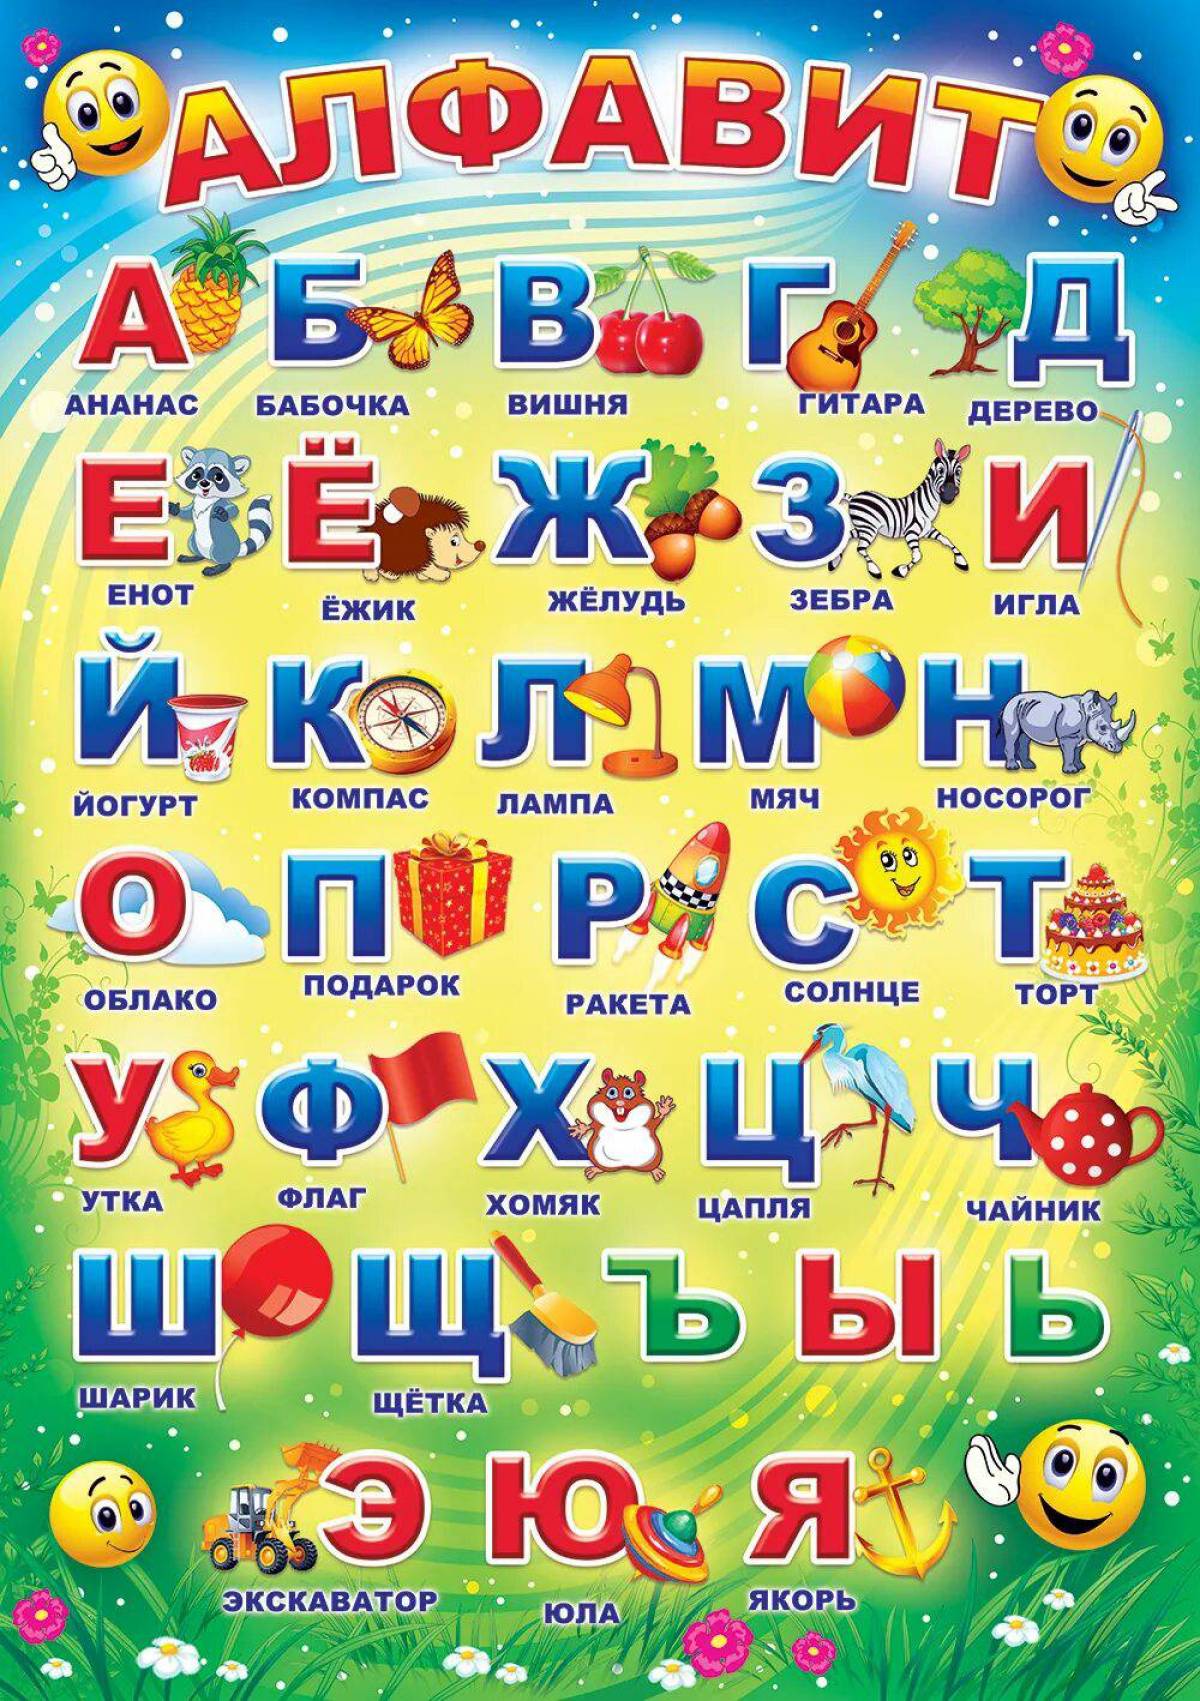 Для детей буквы алфавита #28